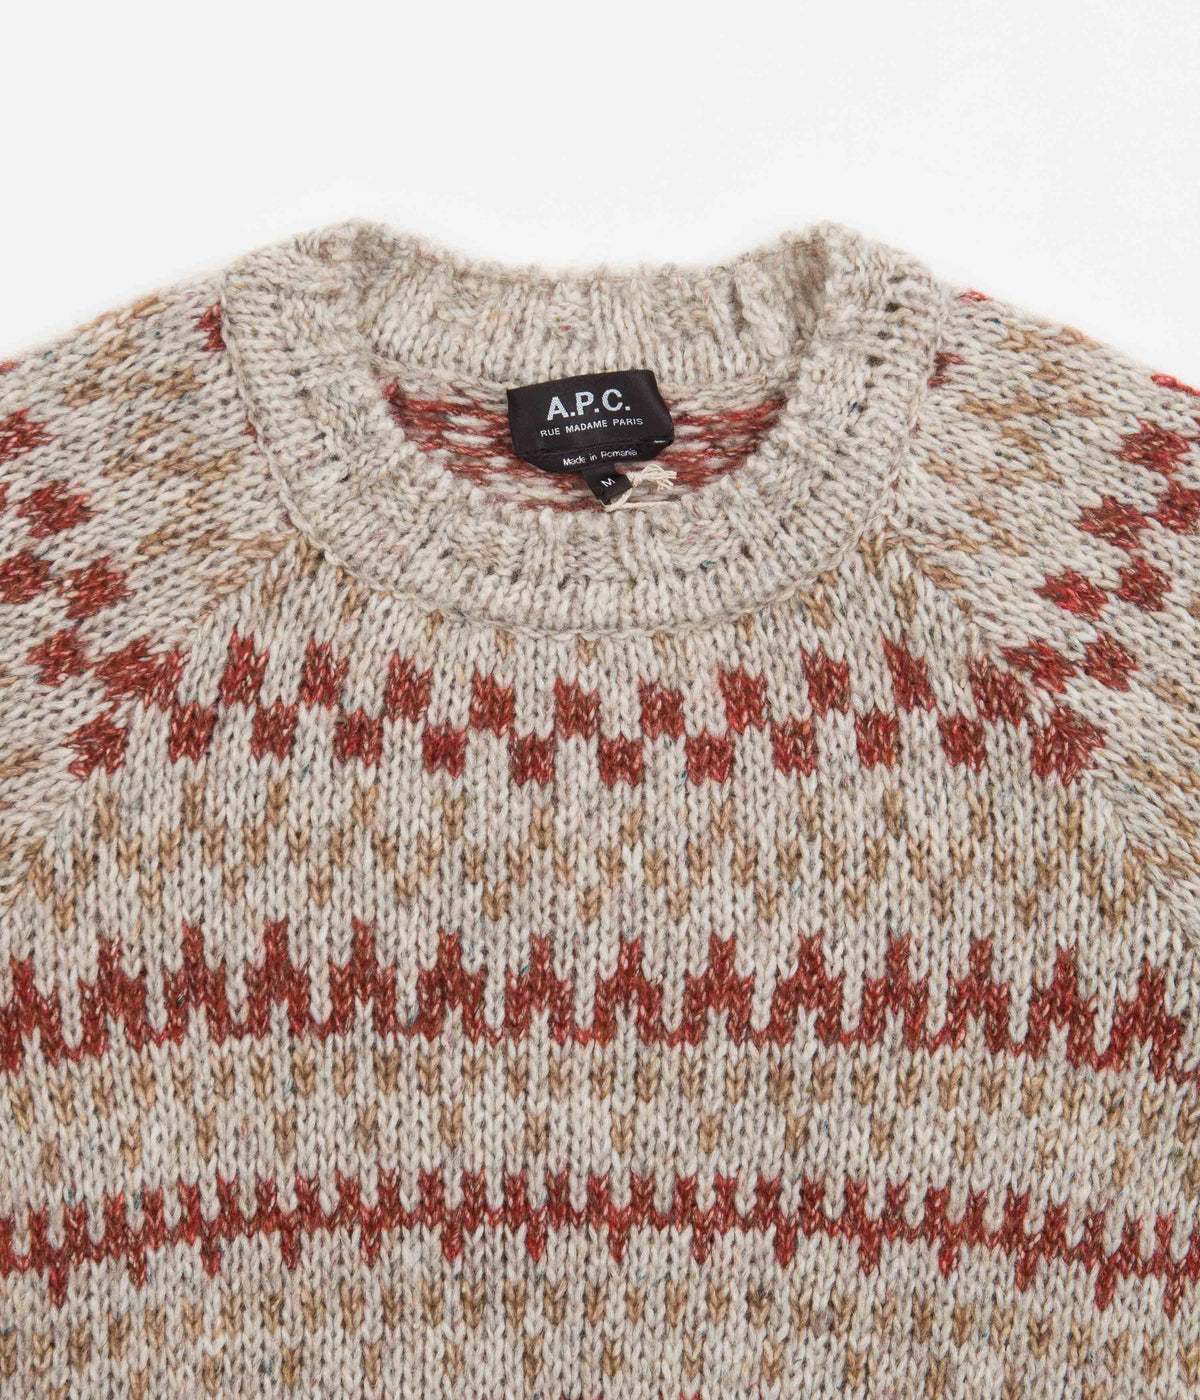 A.P.C. Leonhard Knitted Crewneck Sweatshirt - Cream | Always in Colour